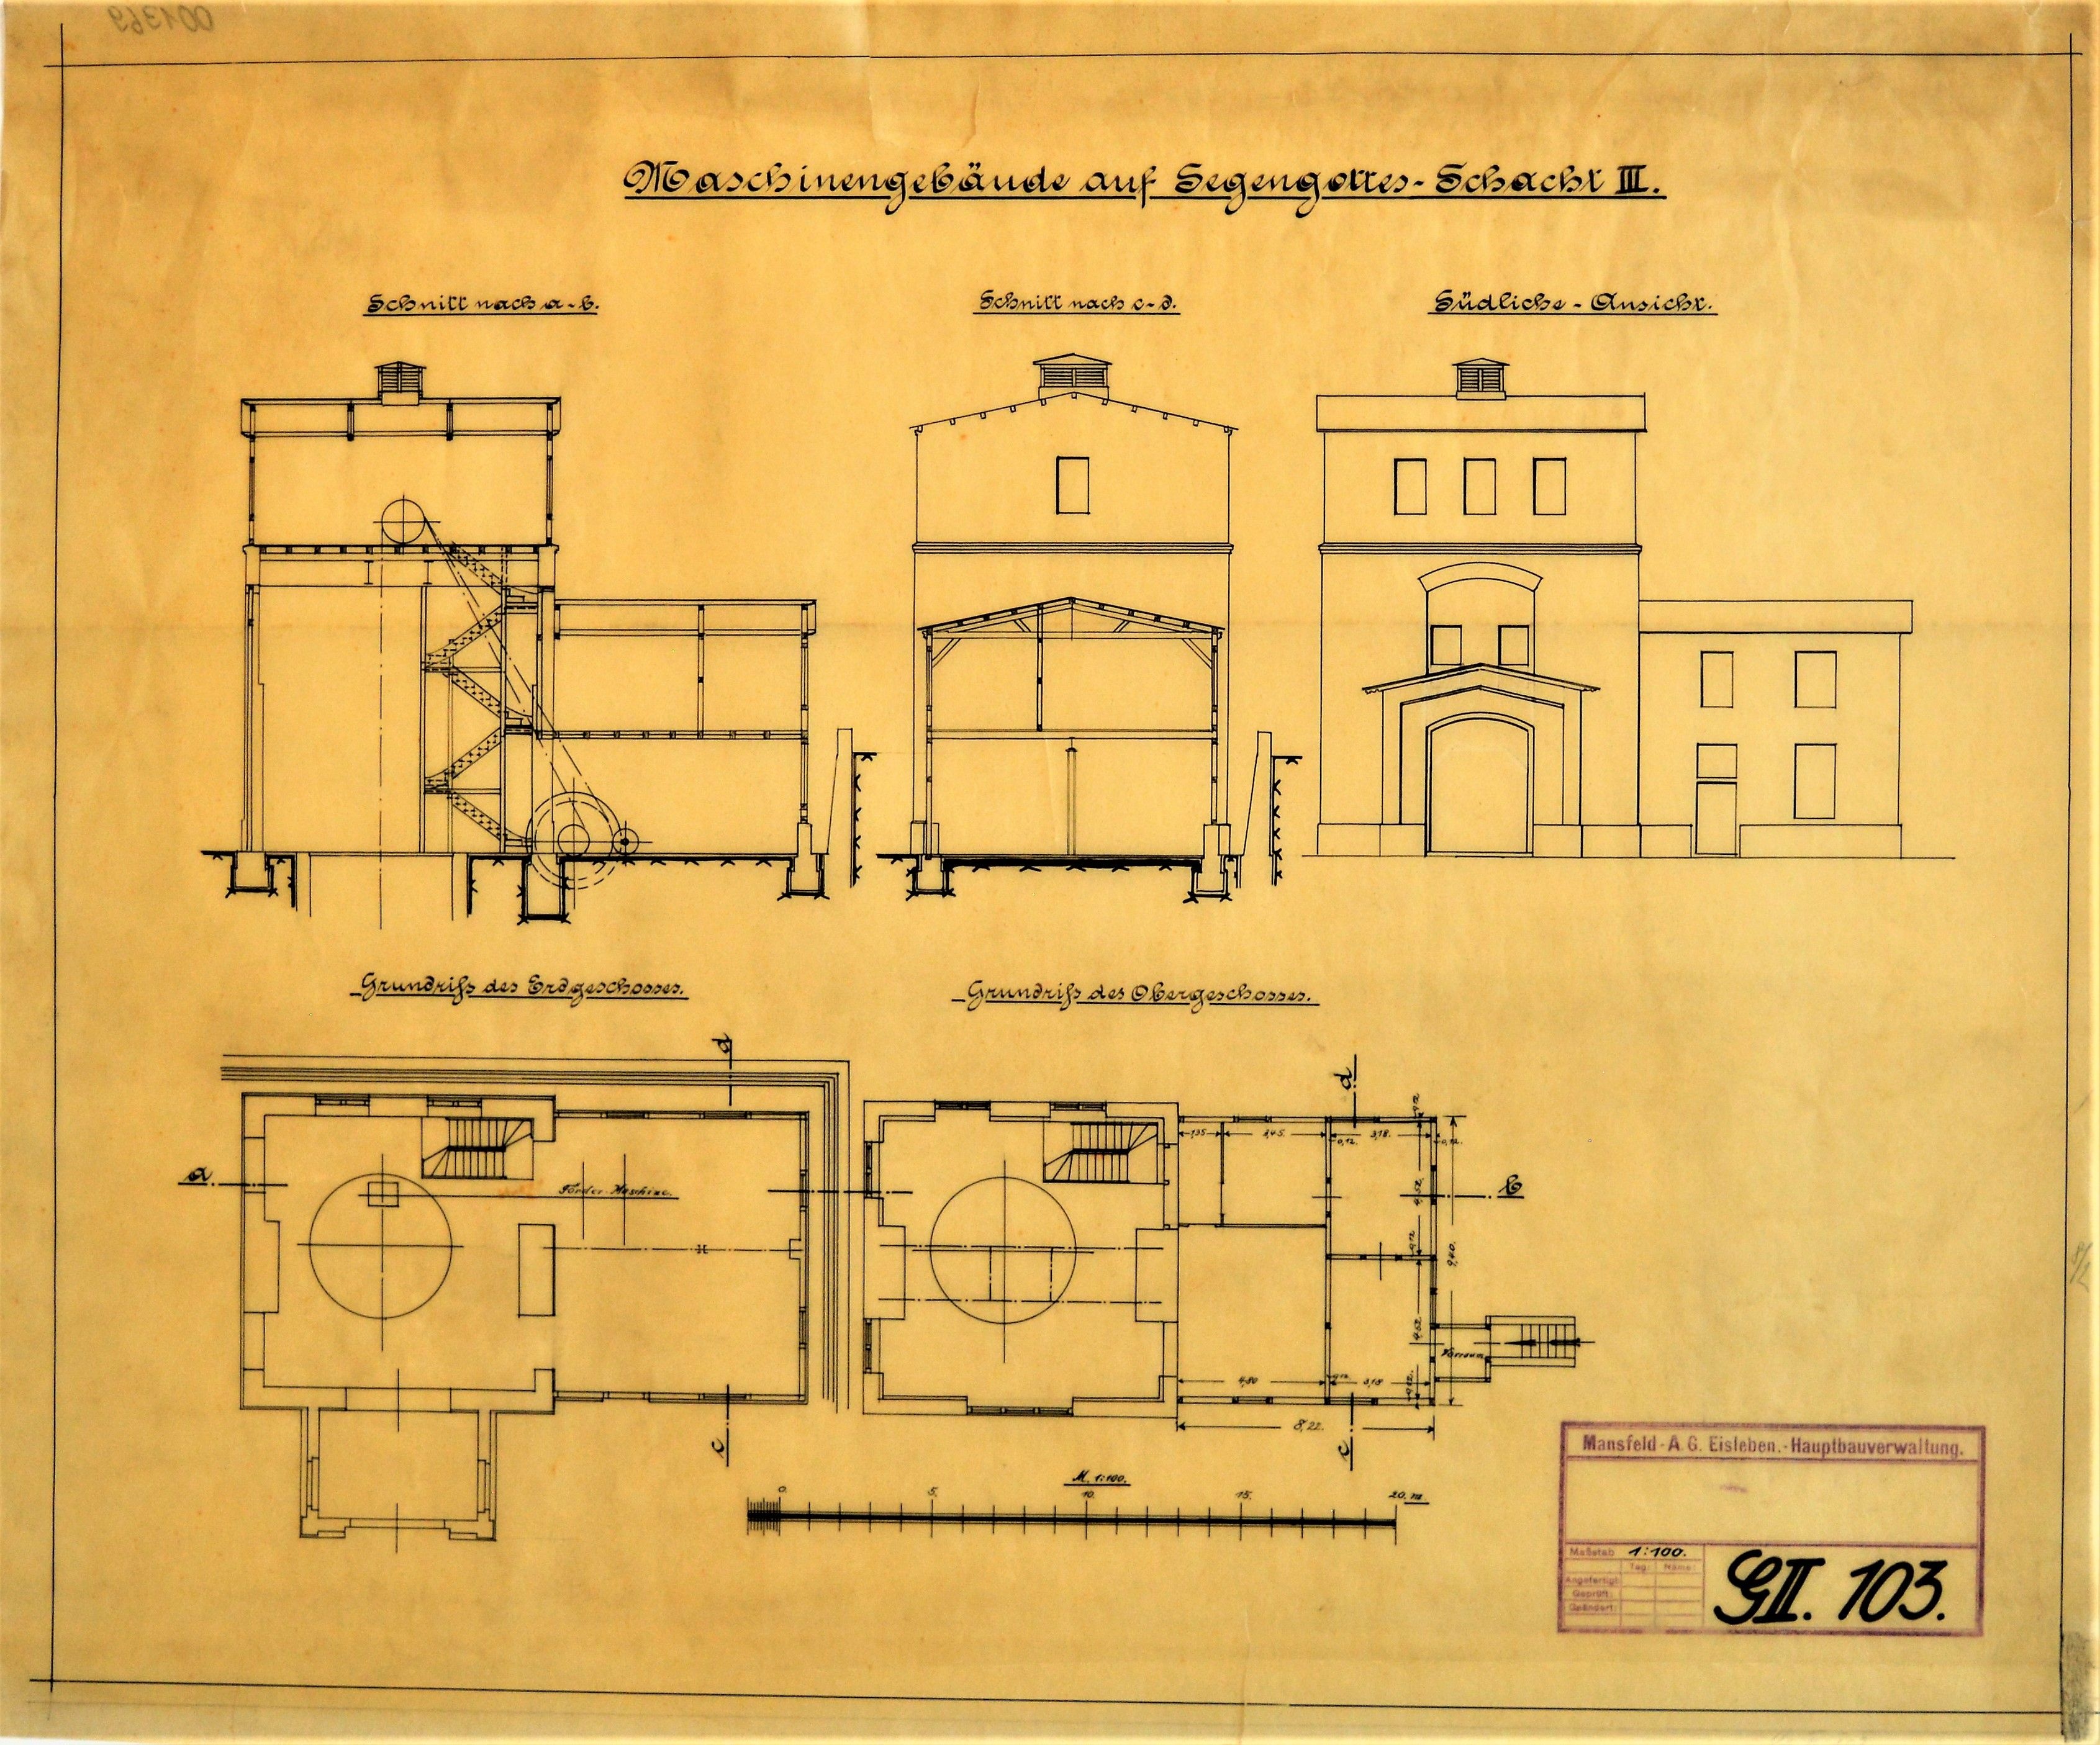 Maschinengebäude auf Segengottes-Schacht III (Mansfeld-Museum im Humboldt-Schloss CC BY-NC-SA)